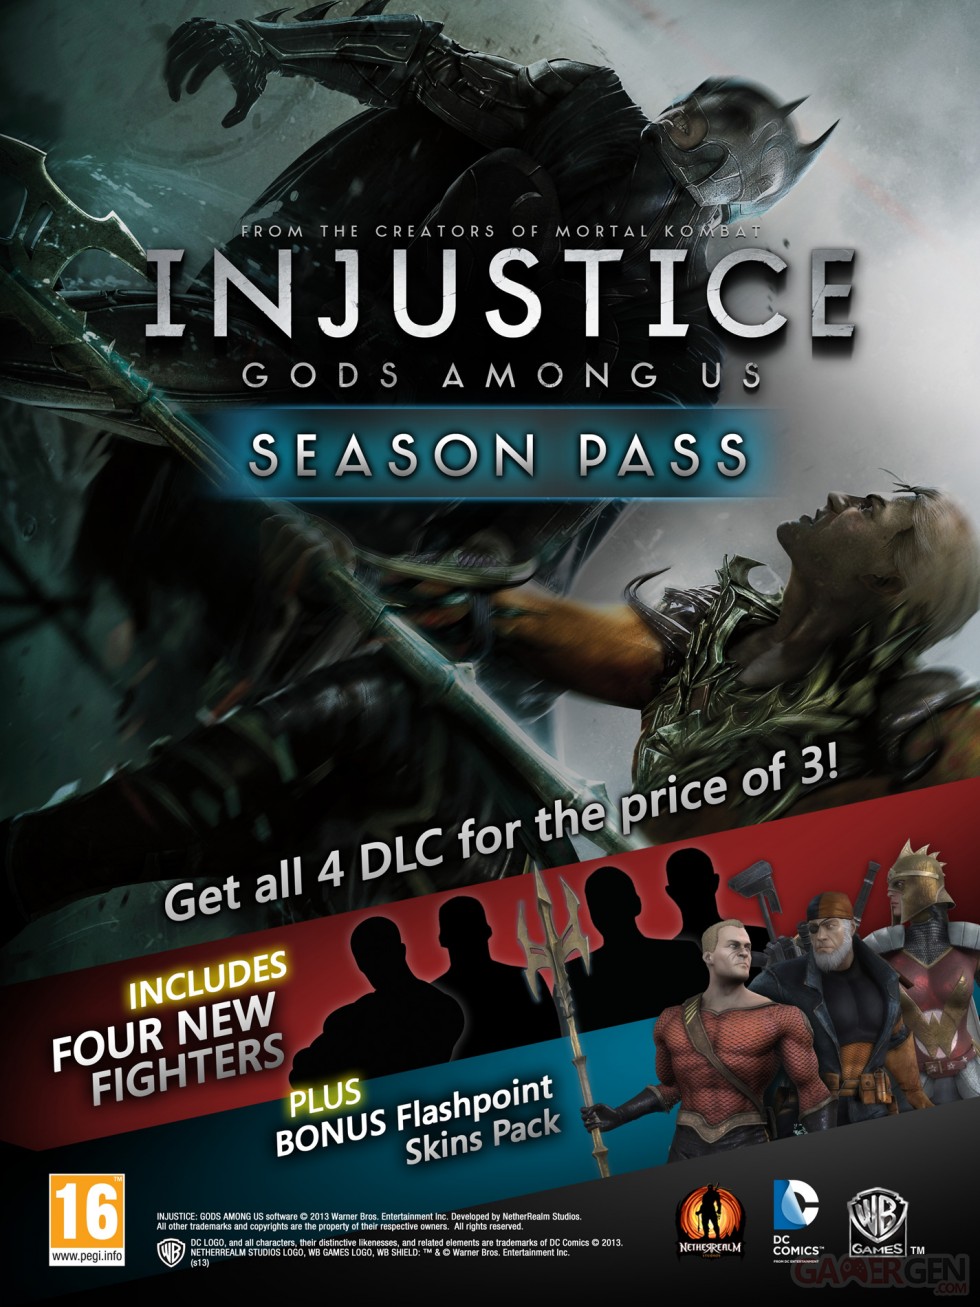 Injustice_21-03-2013_Season-Pass